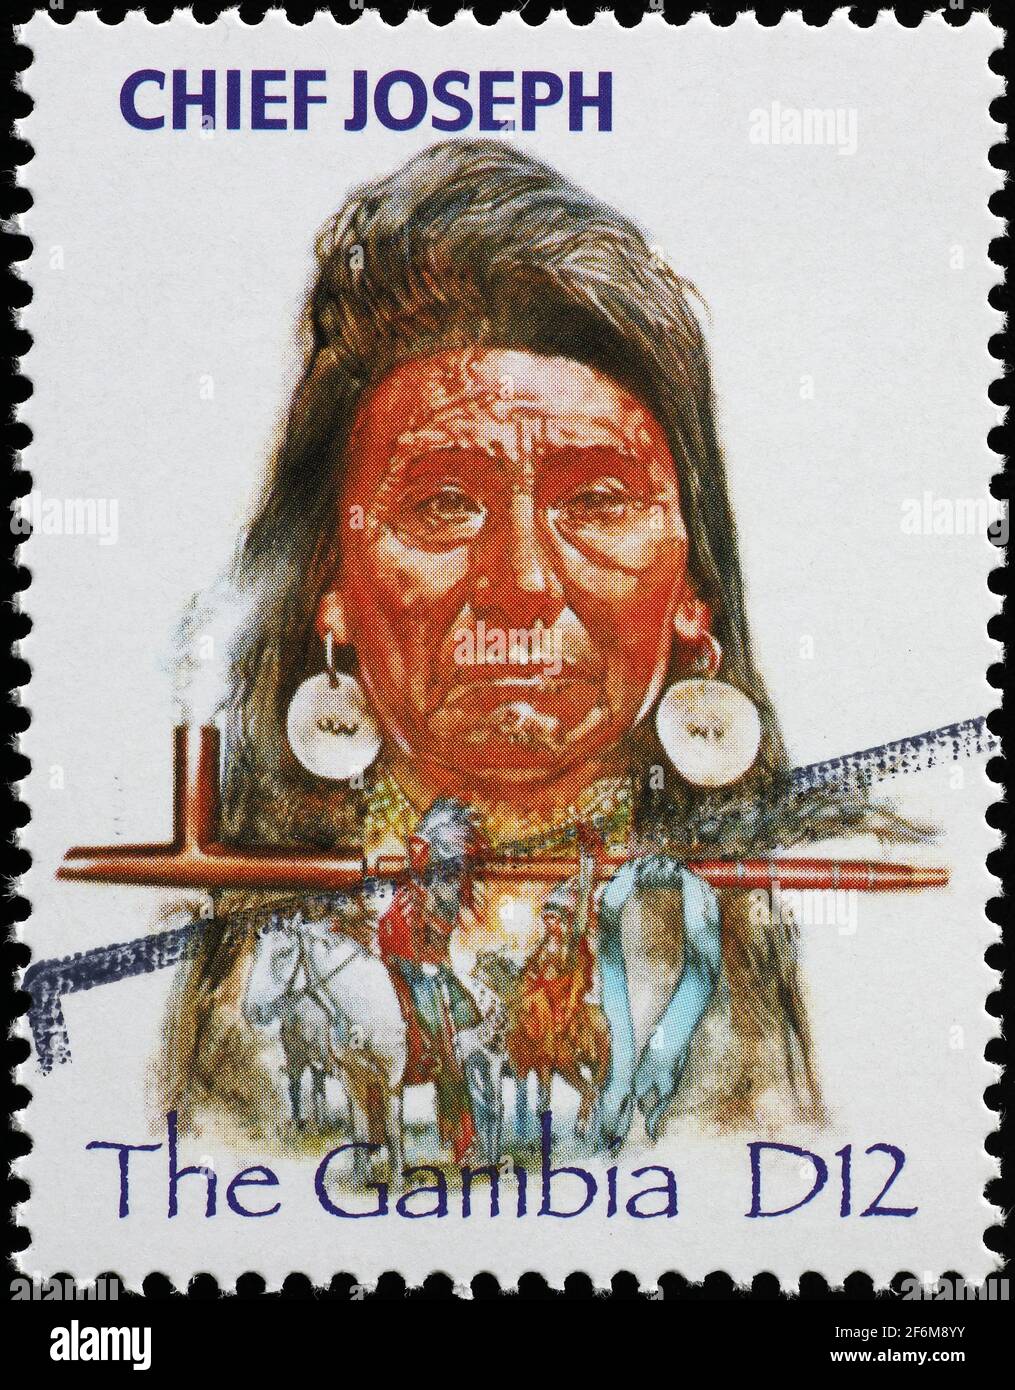 Chief Joseph on postage stamp Stock Photo